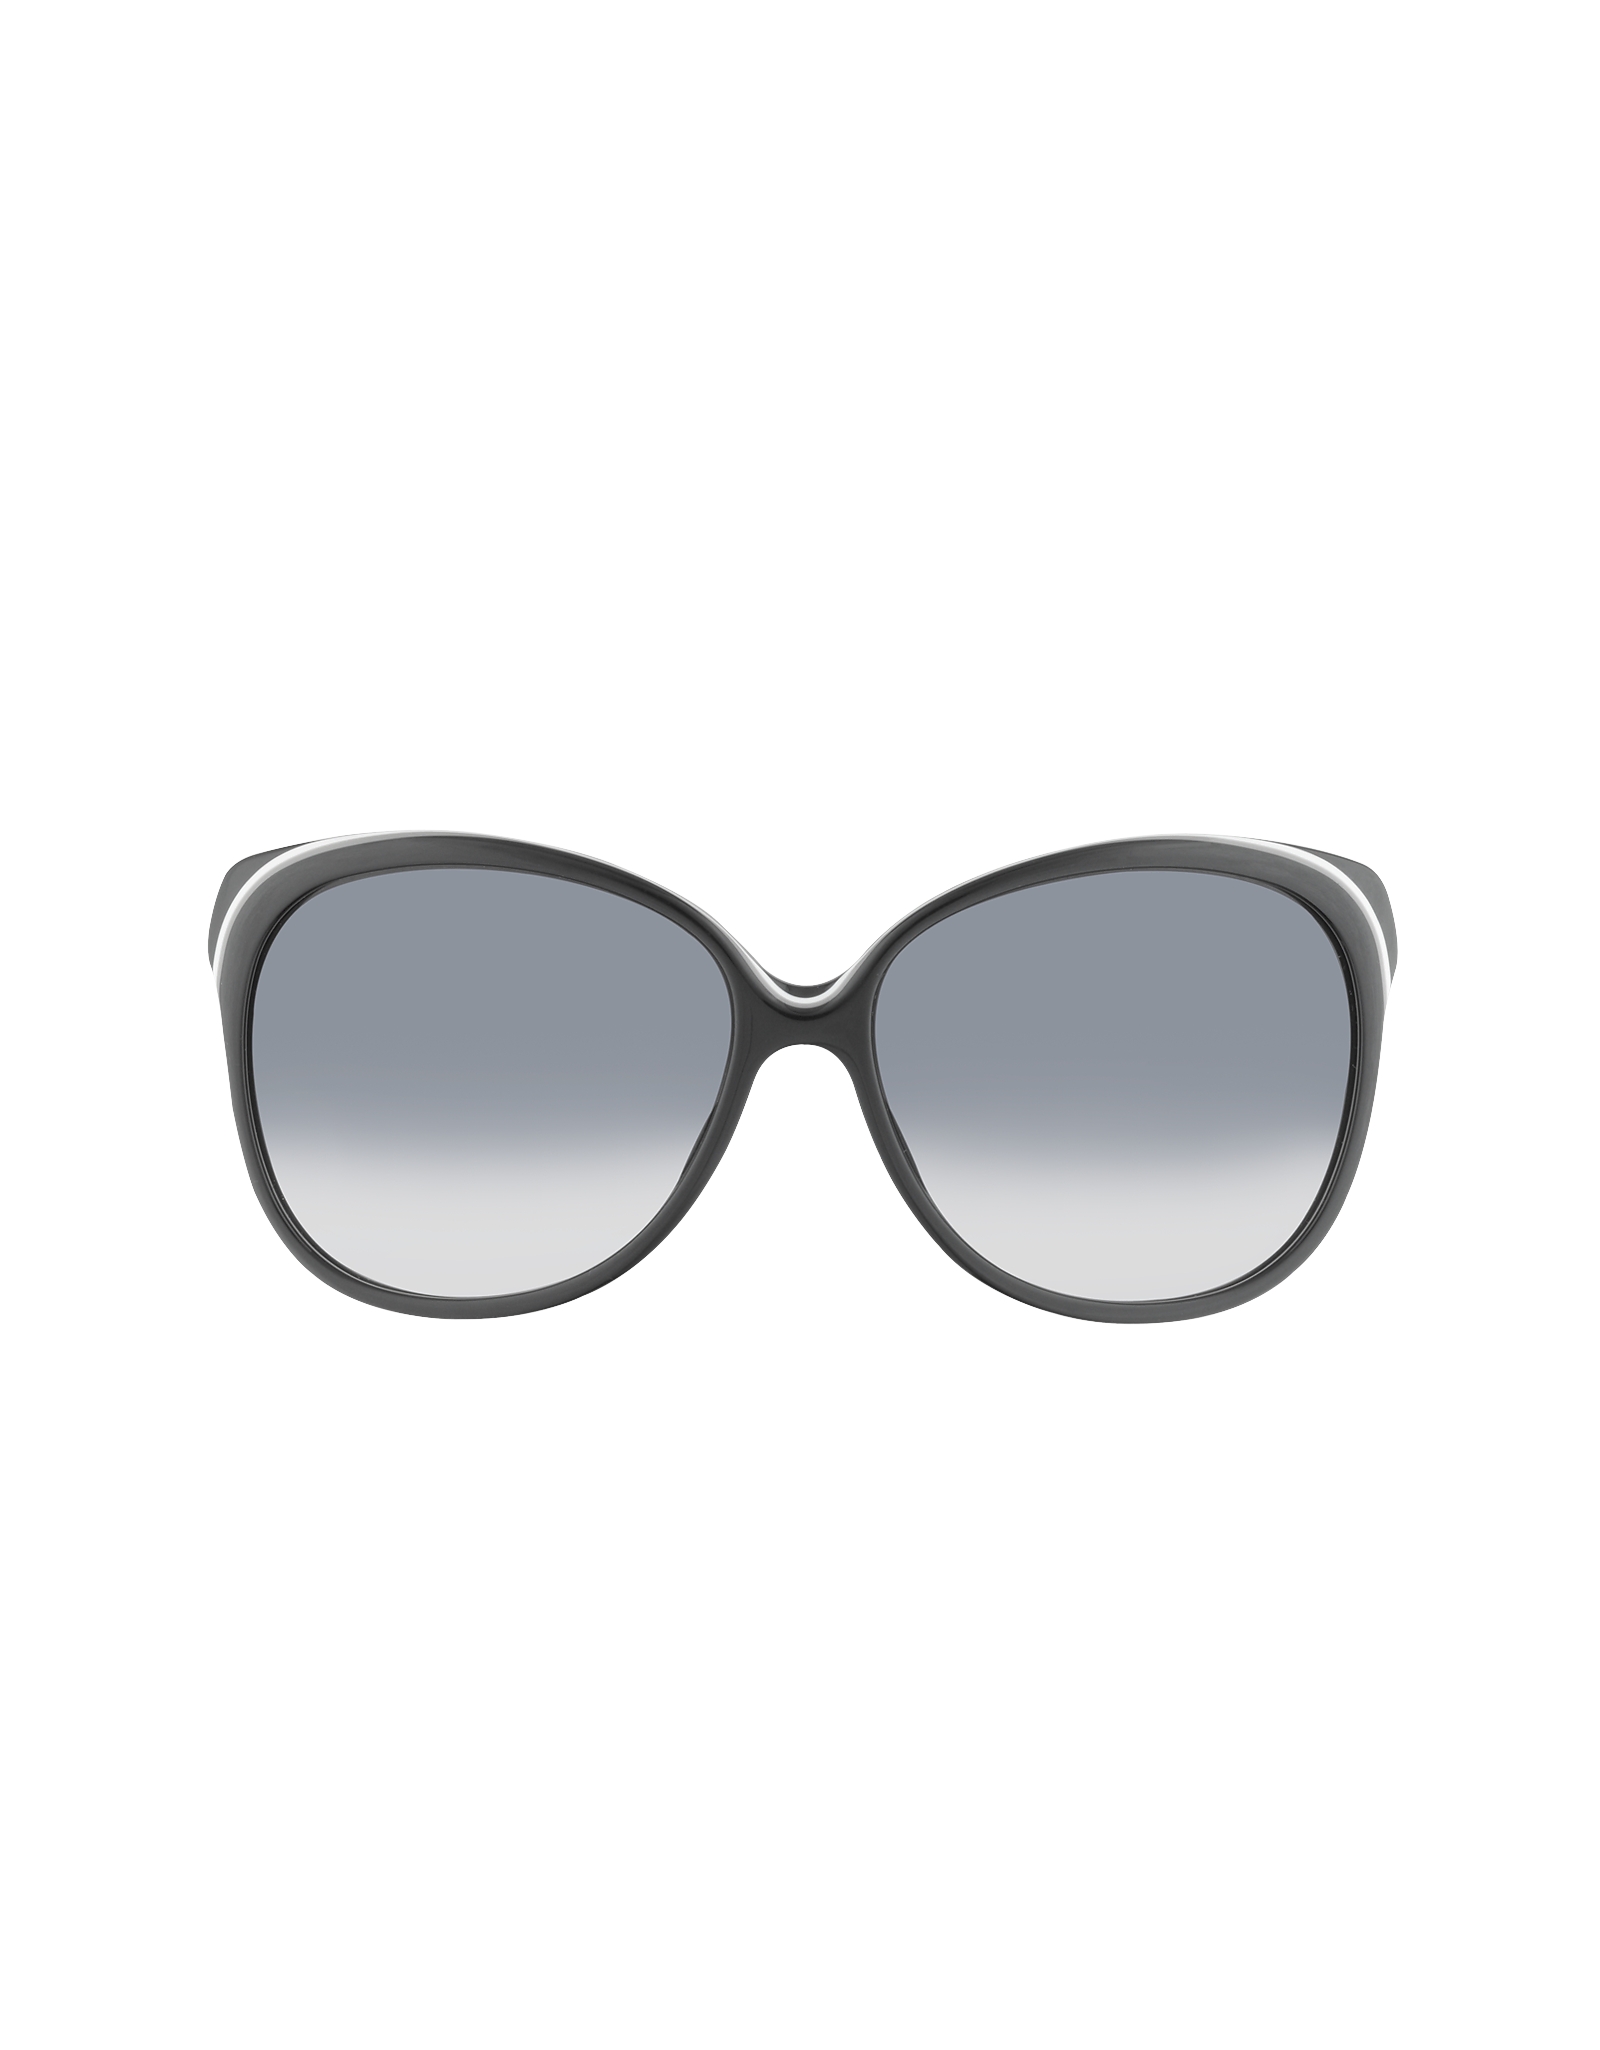 Lyst - Gucci Women's Round Gg Logo Sunglasses in Black